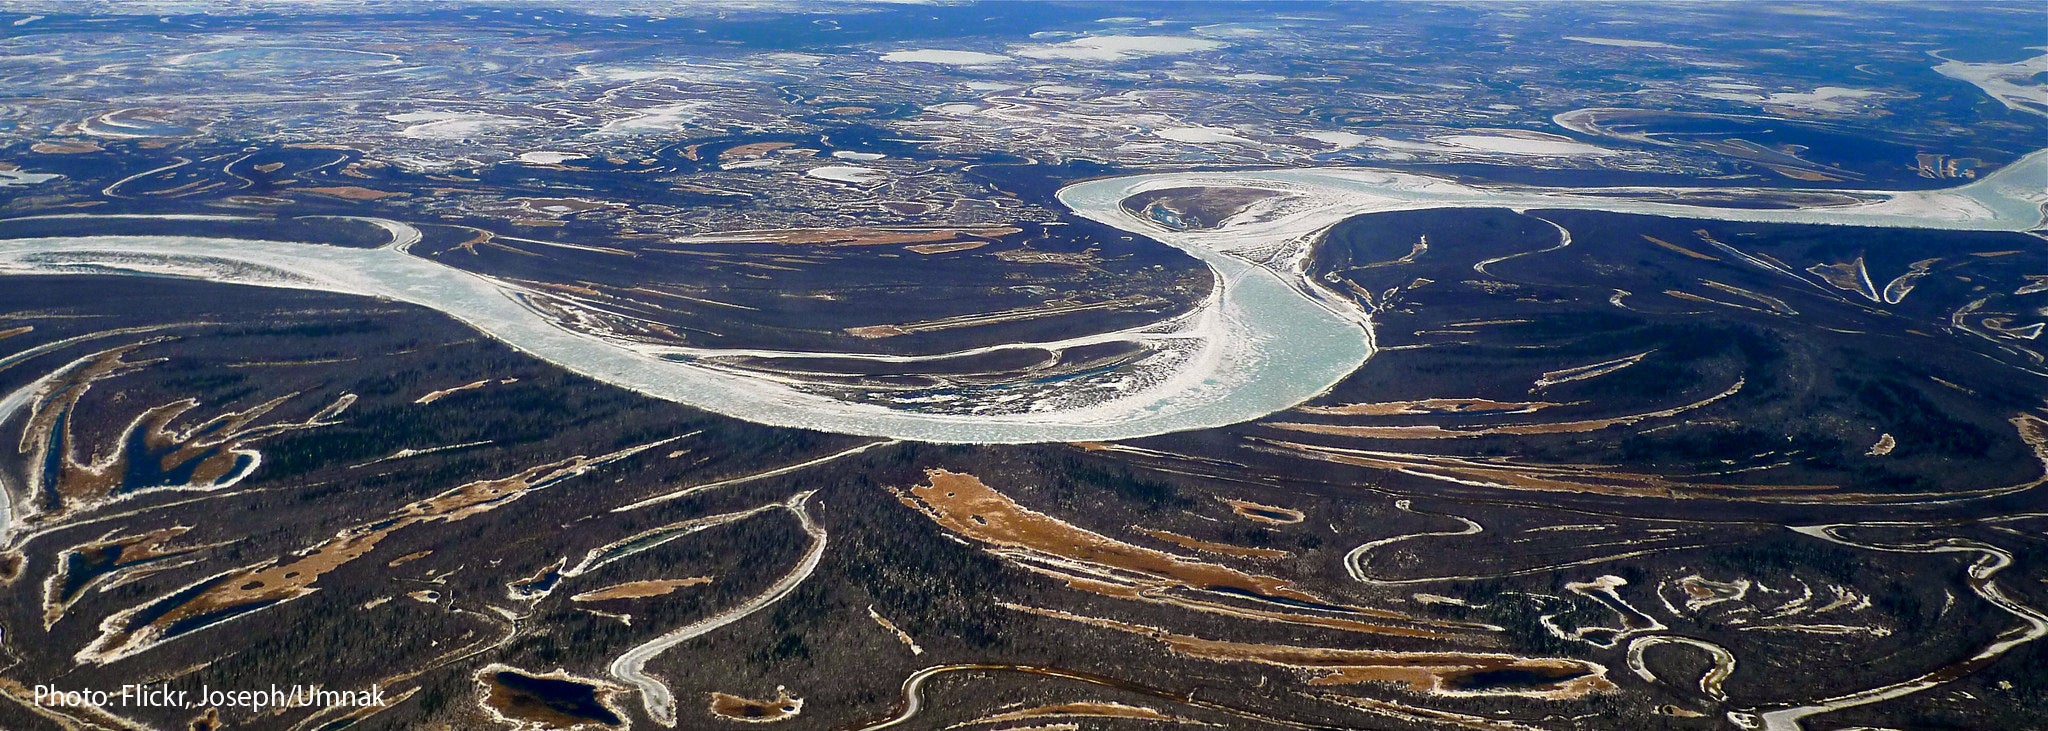 An aerial view of the Kuskokwim River in Alaska. The Donlin Gold mine project would dramatically change the Yukon Kuskokwim region.
(Joseph/Umnak / CC BY-SA 2.0)